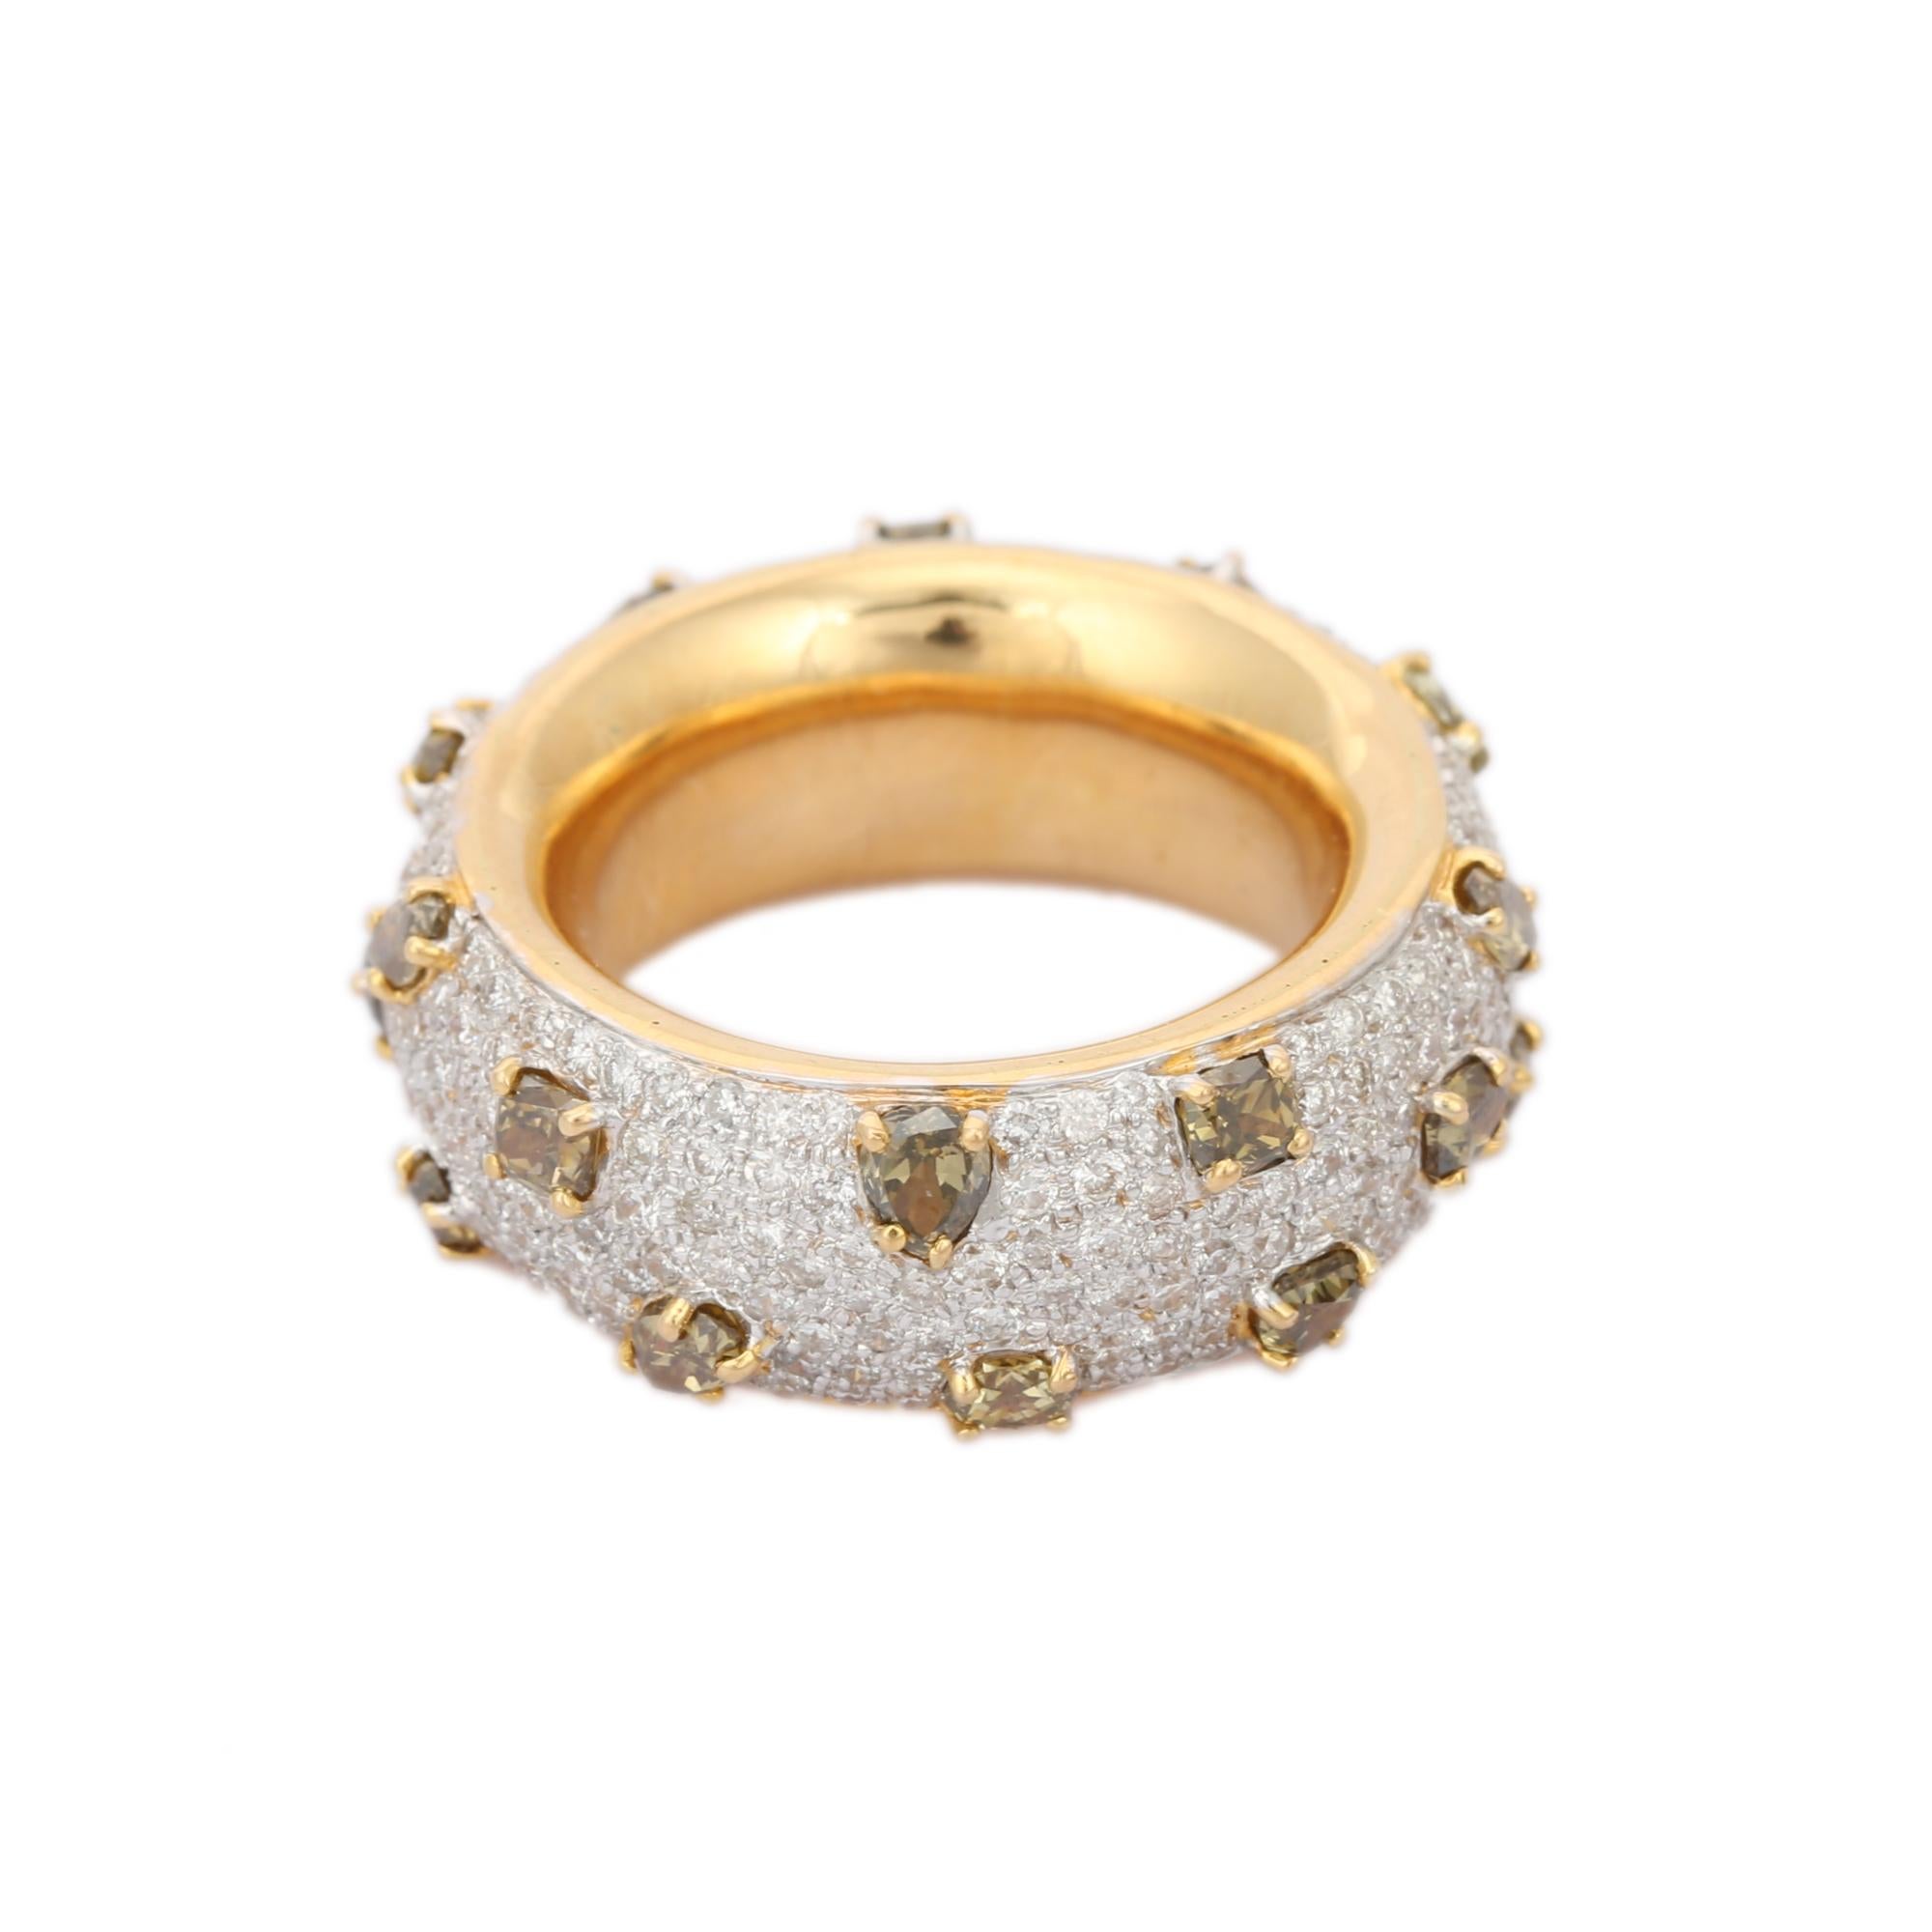 For Sale:  18 Karat Solid Yellow Gold 6.3 Carats Diamond Wedding Band Ring 3